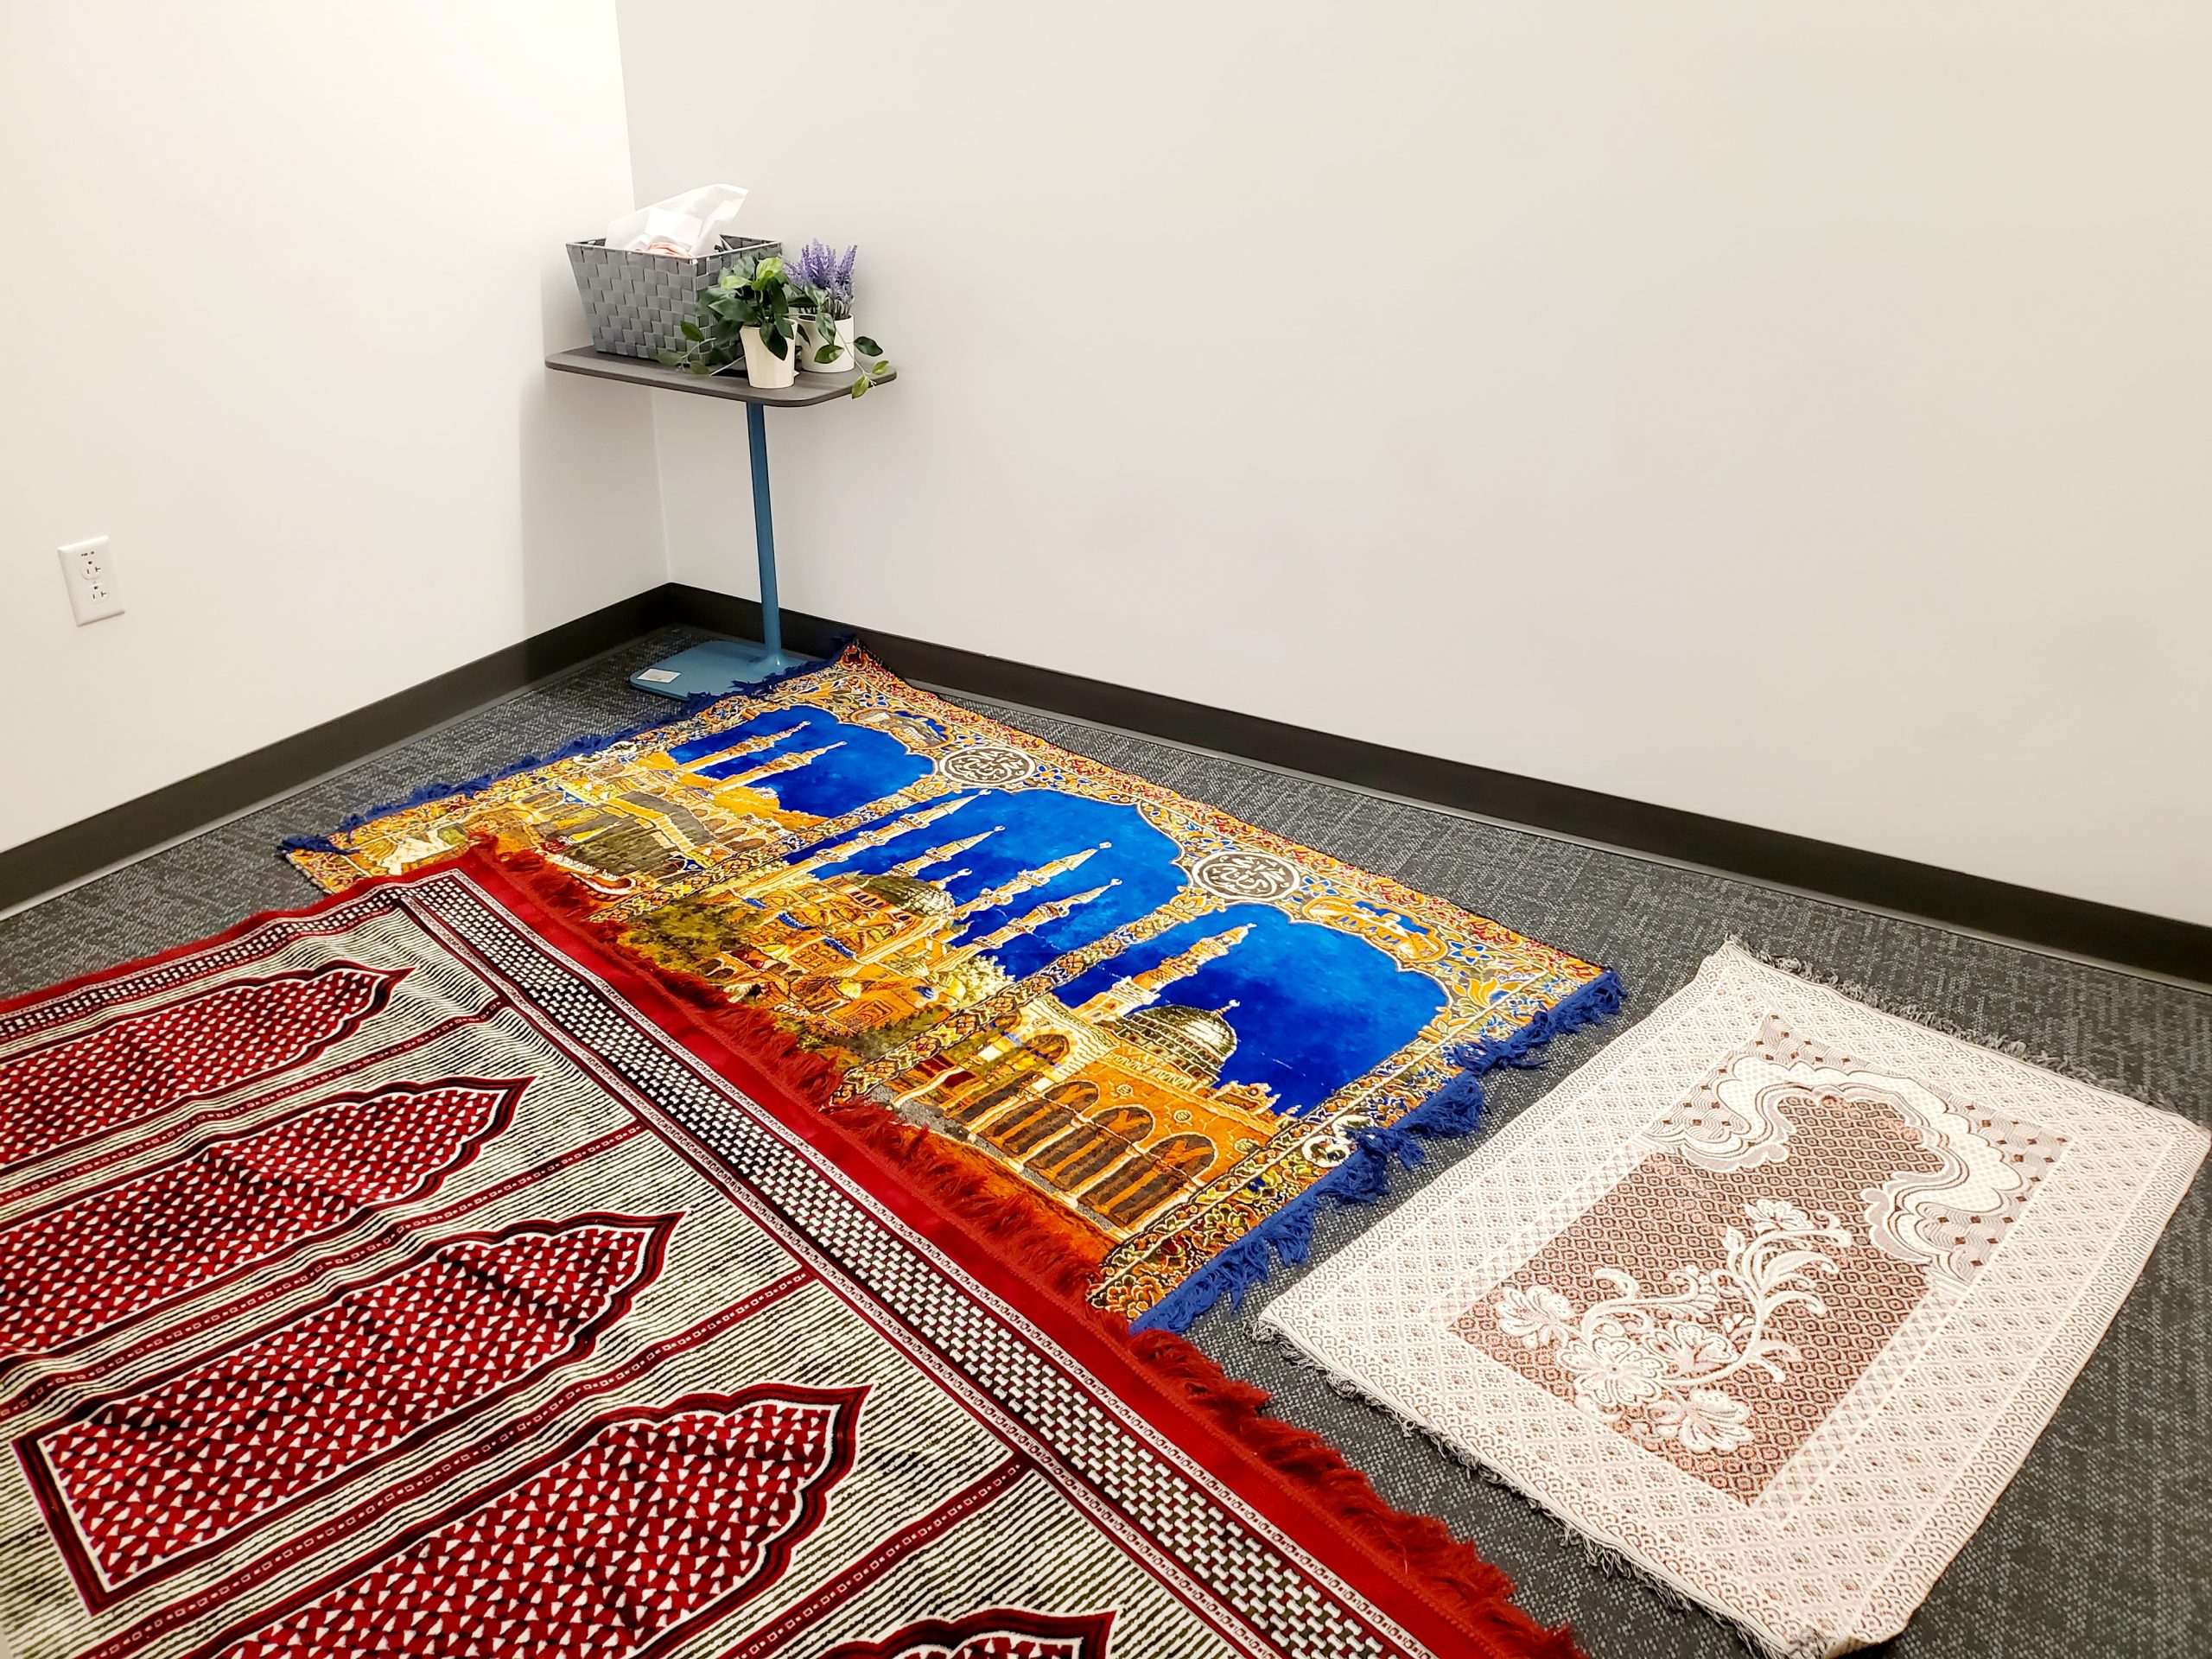 Three prayer rugs